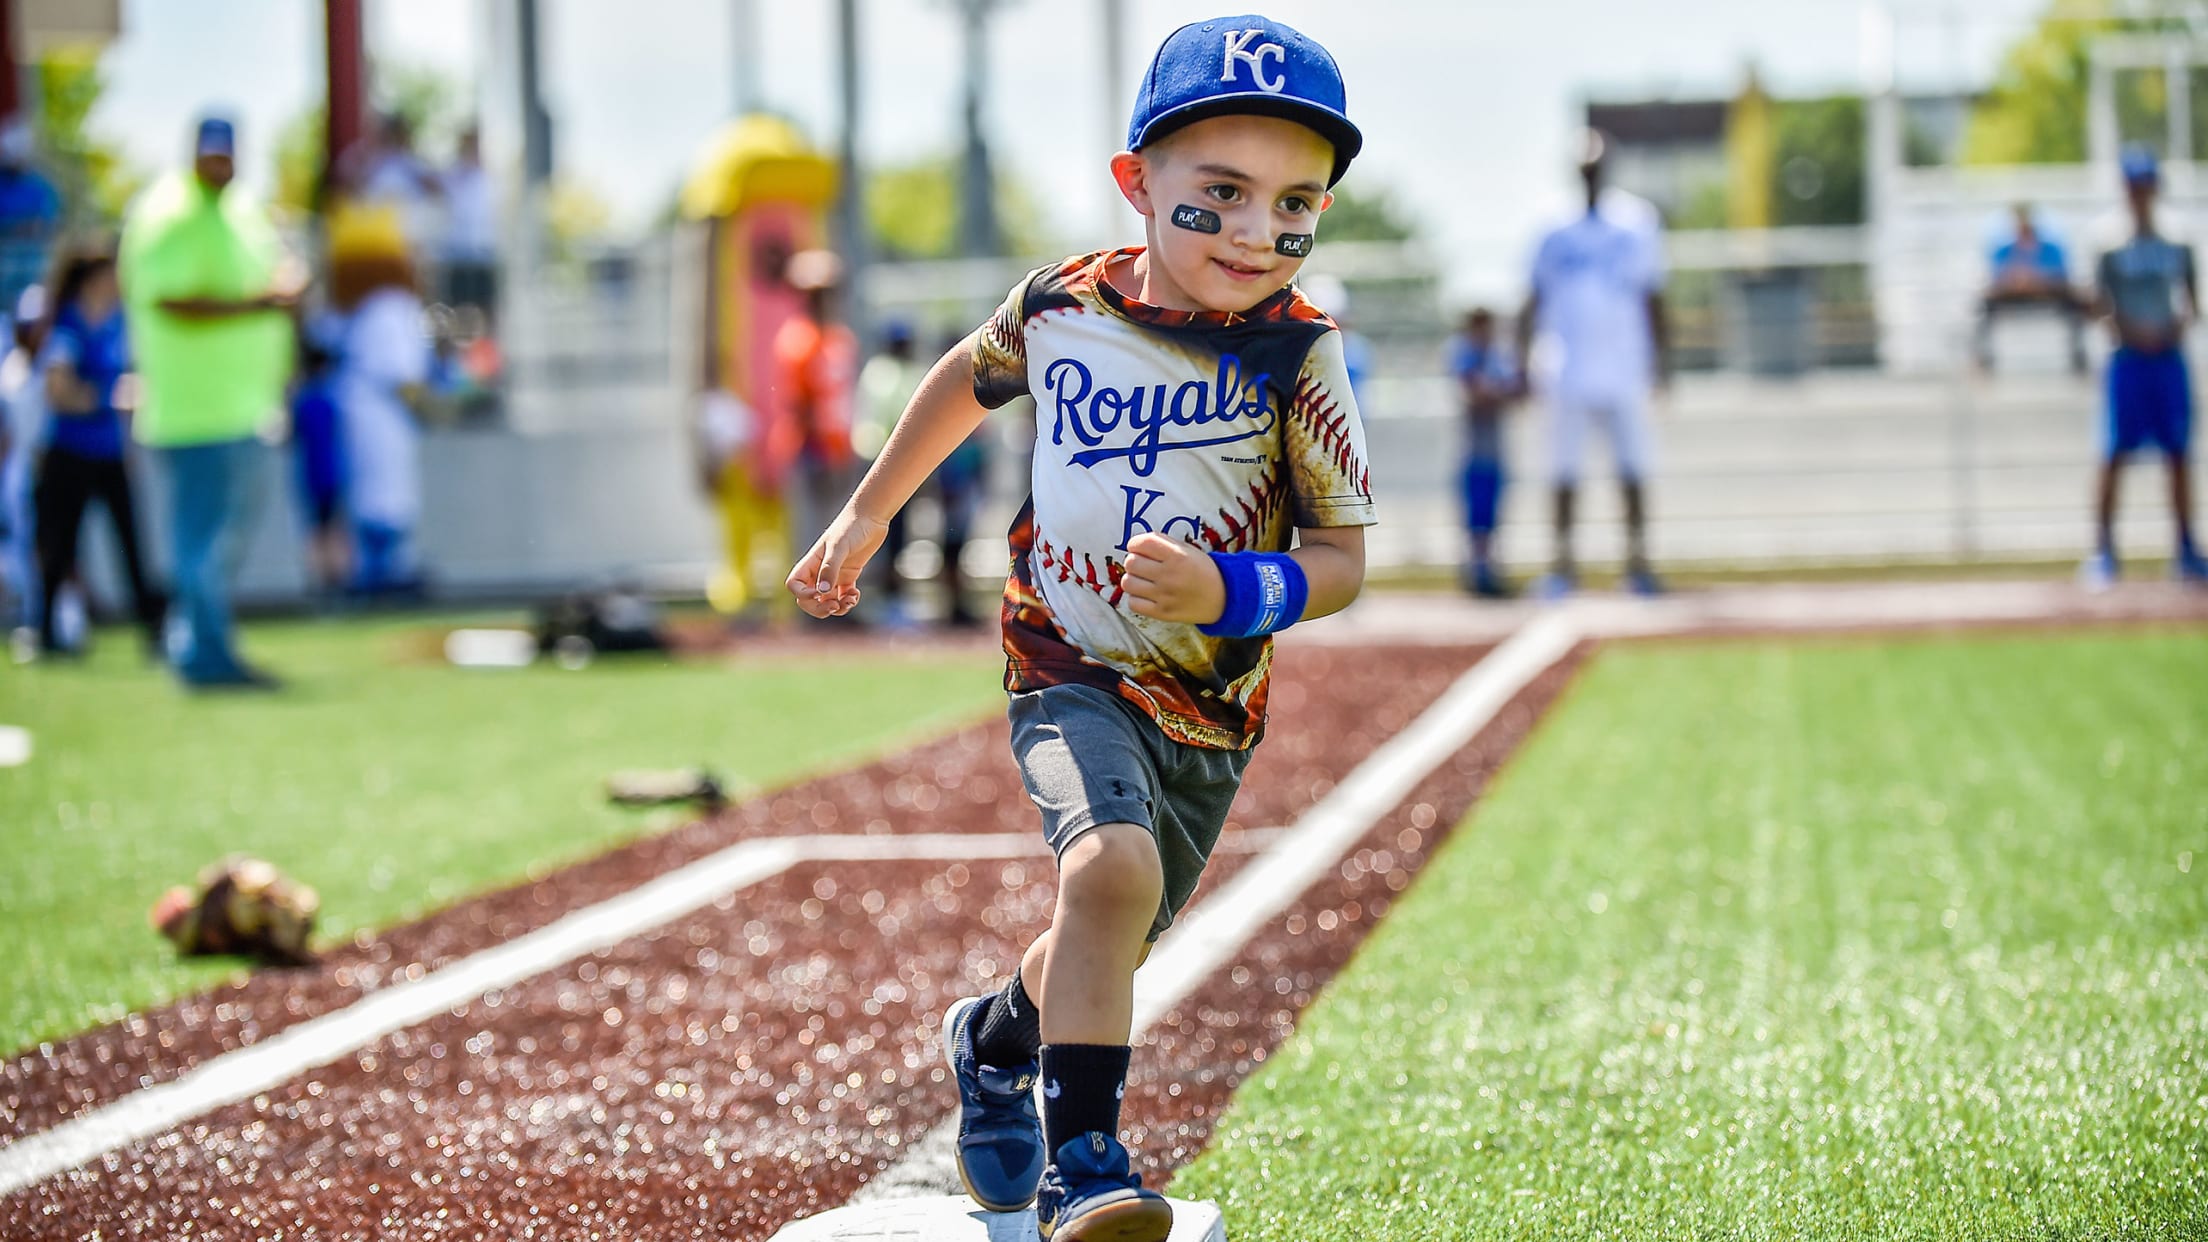 The Kansas City MLB Urban Youth Academy to Be Located at Parade Park